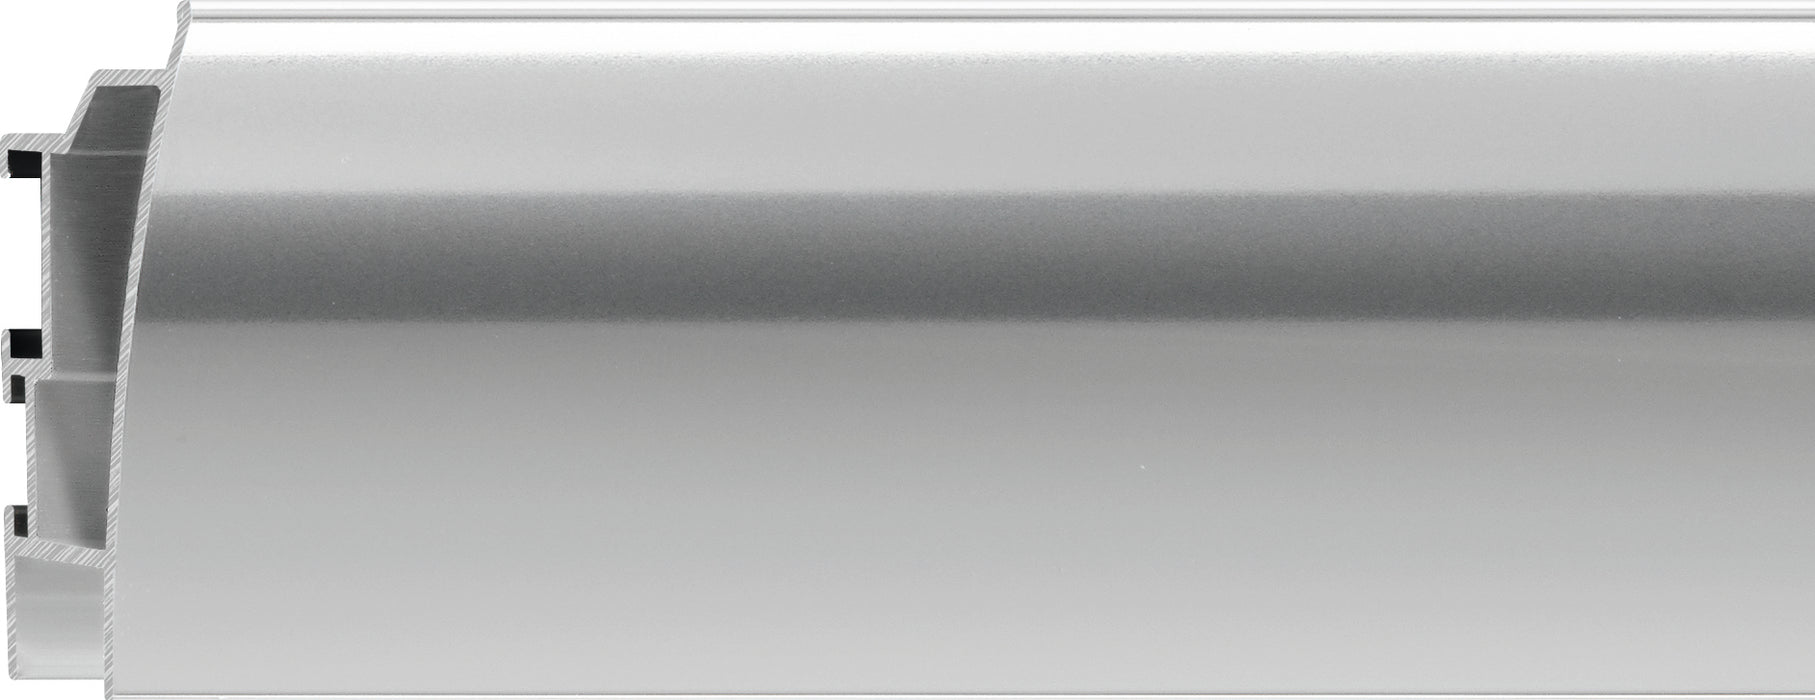 Nielsen Aluminium Metal Frame Profile 220 P220 - 2220003 Polished Silver